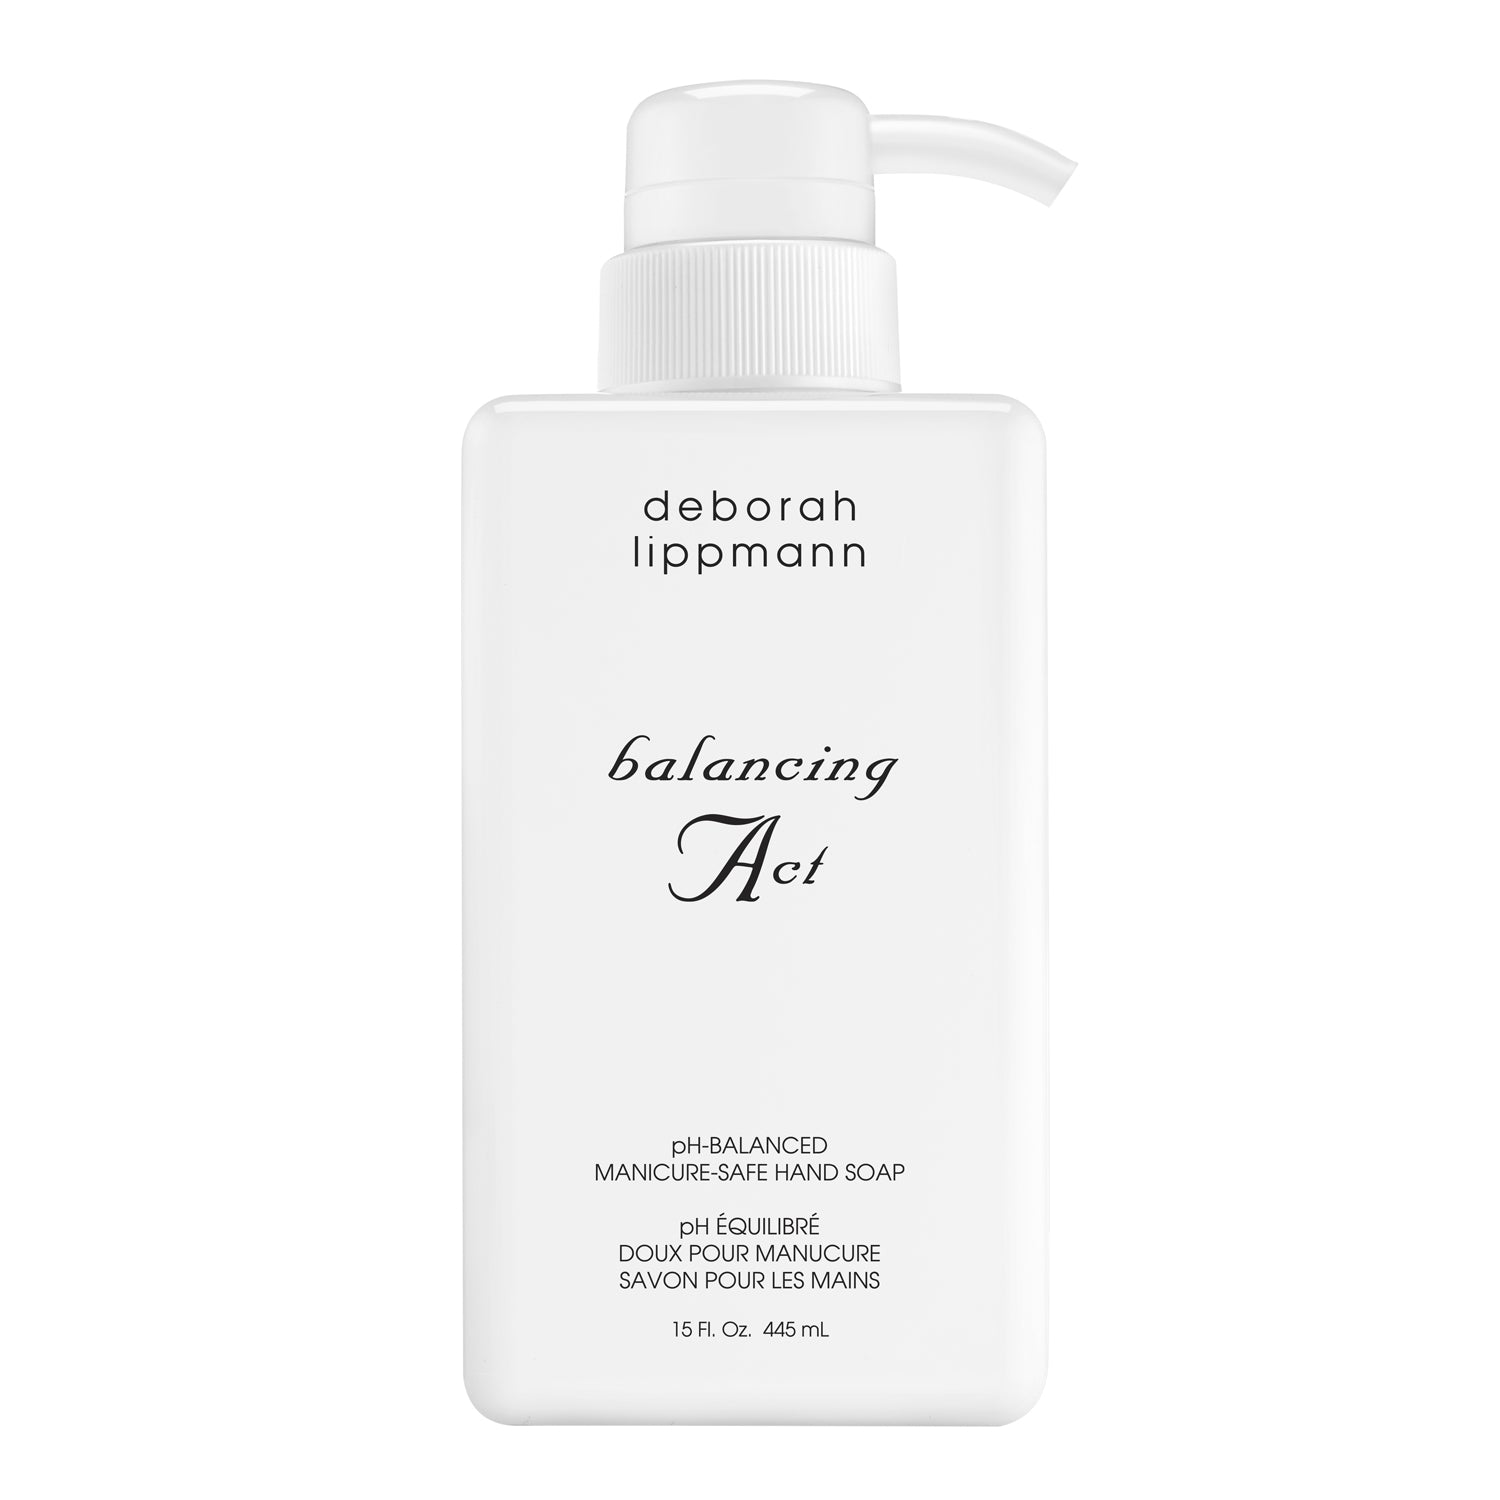 Balancing Act - pH Balanced Manicure-Safe Hand Soap - Deborah Lippmann